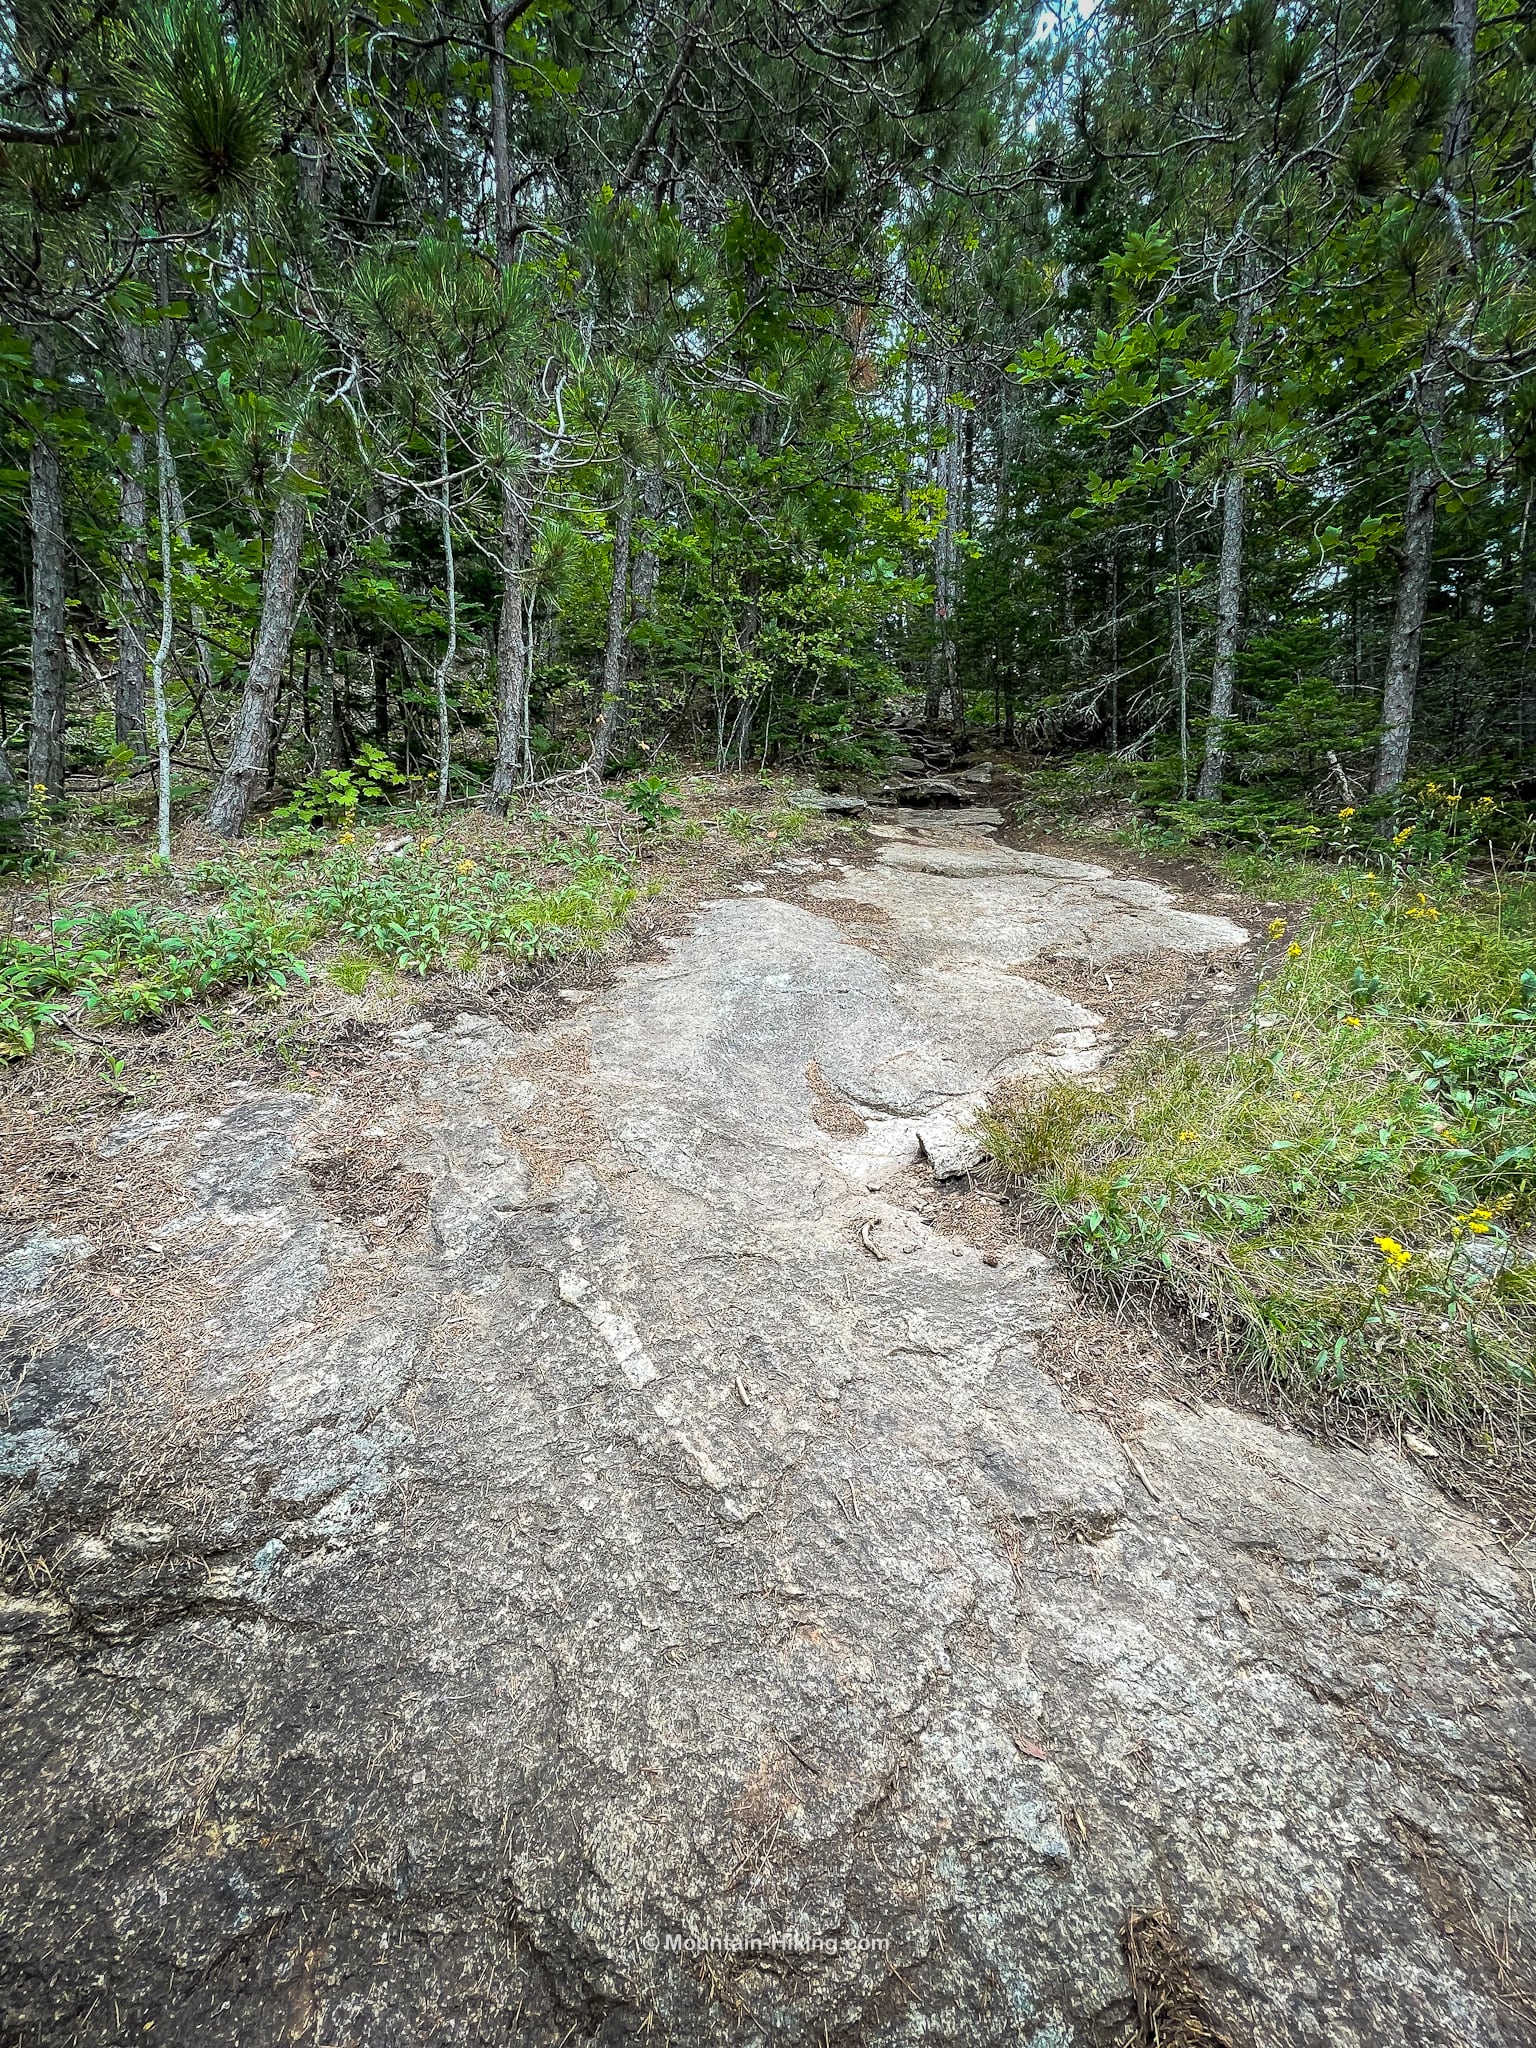 rock slab trail bed